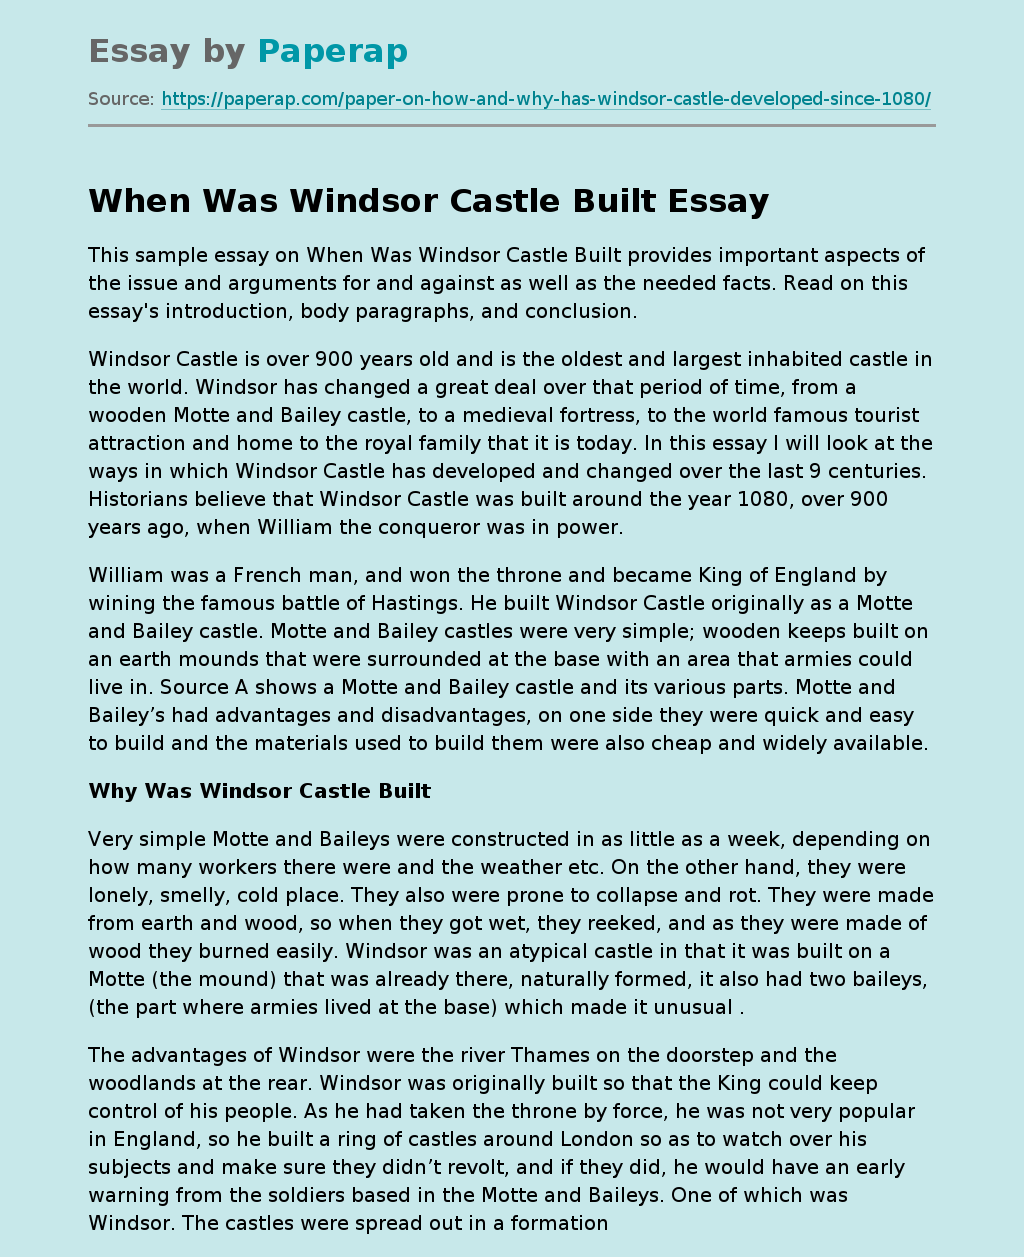 When Was Windsor Castle Built